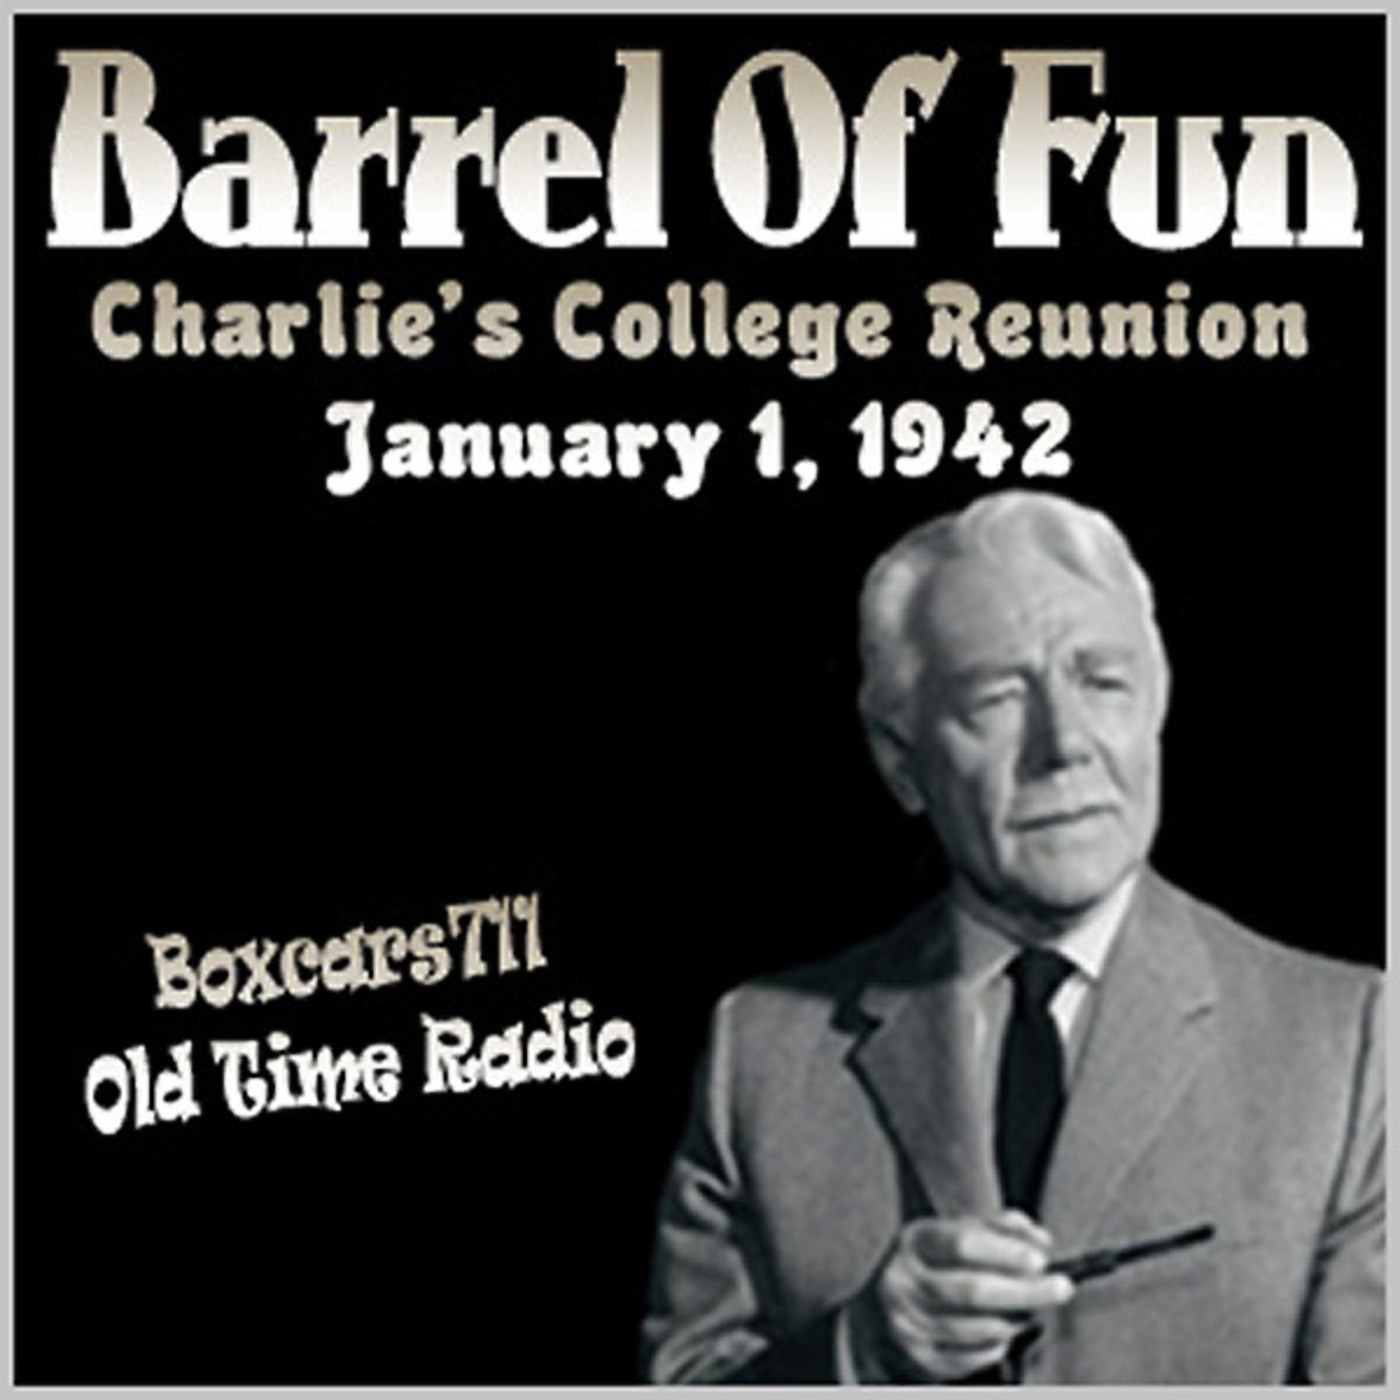 Episode 9704: Barrel Of Fun - 